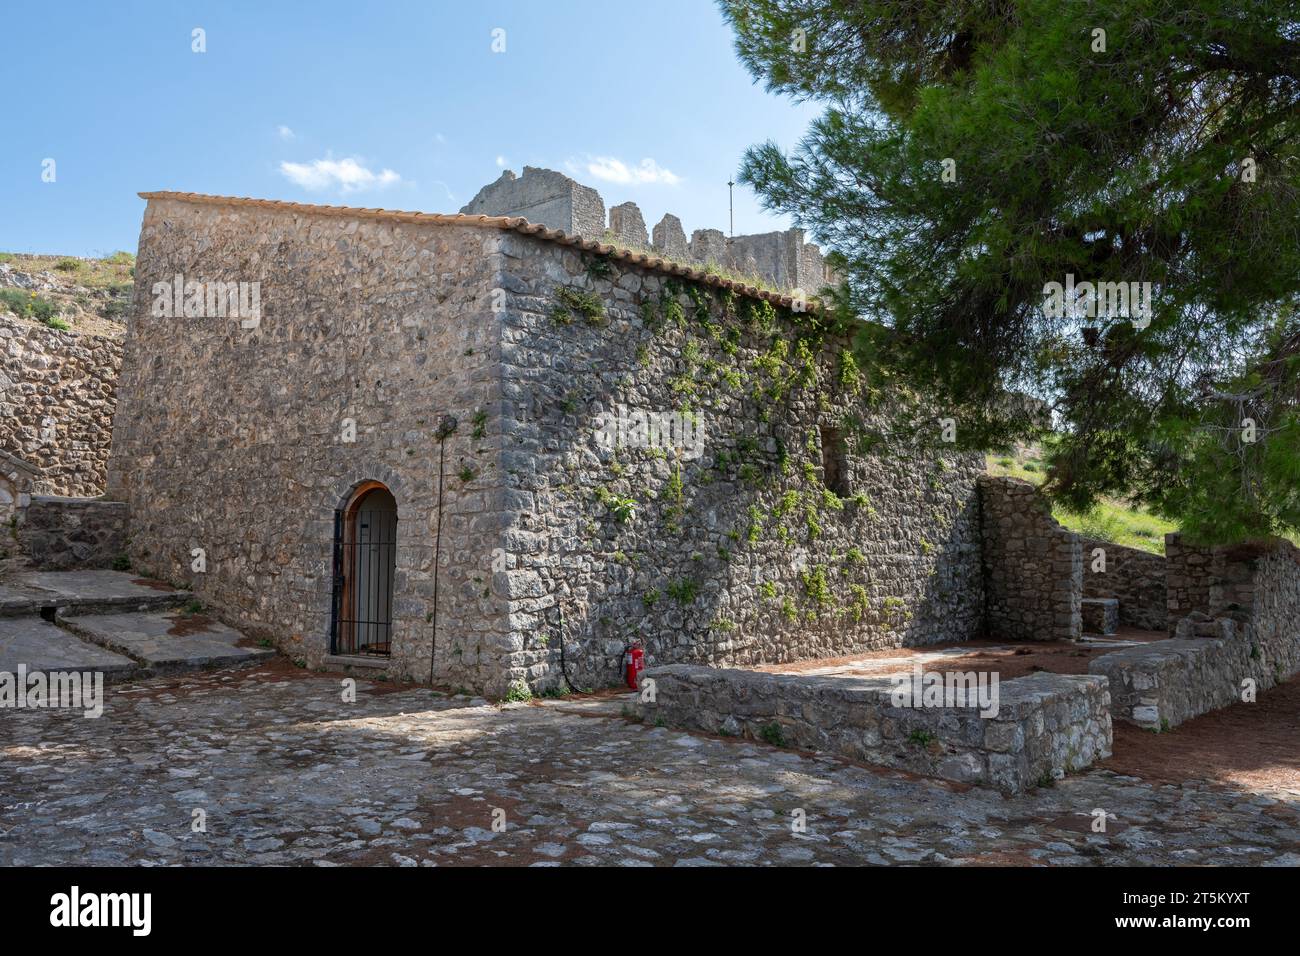 Una iglesia dentro del suelo del castillo veneciano de Vonitsa. Vonitsa. Grecia. Foto de stock